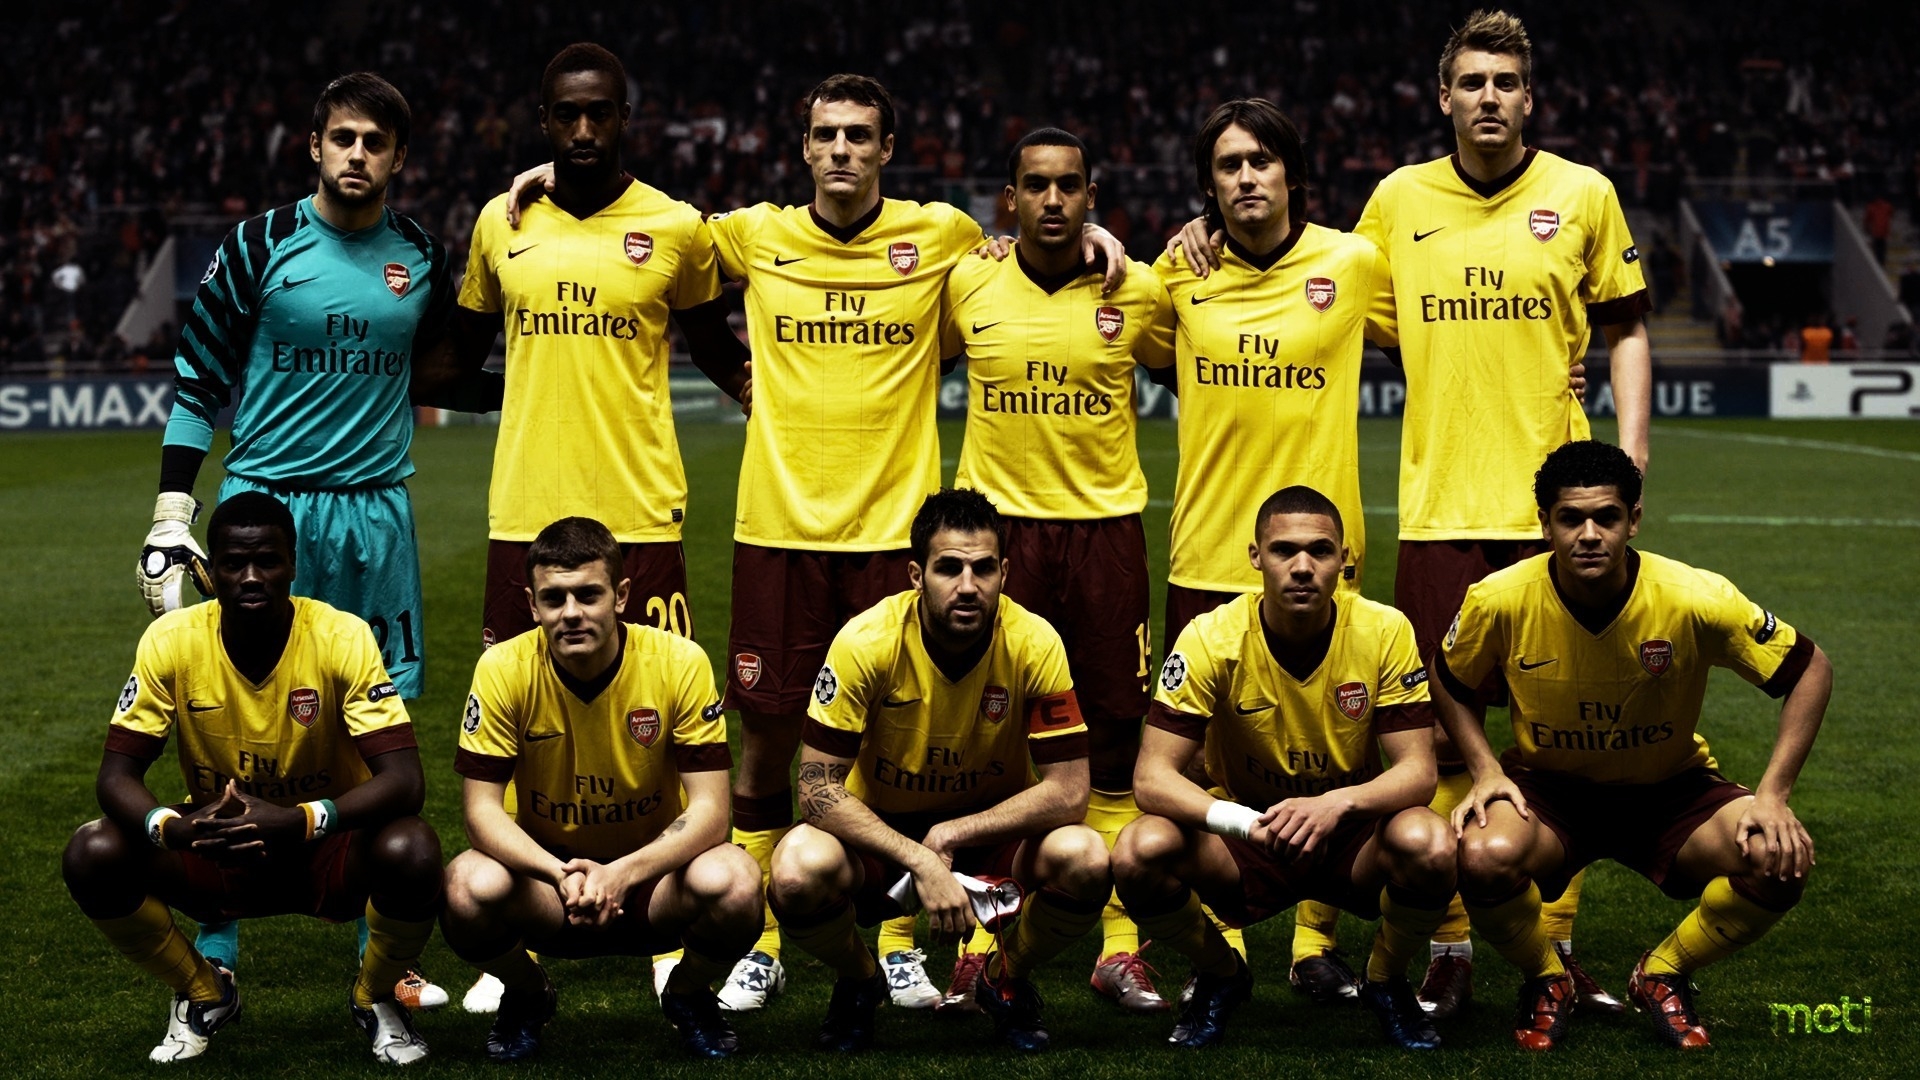 Arsenal London Team for 1920 x 1080 HDTV 1080p resolution